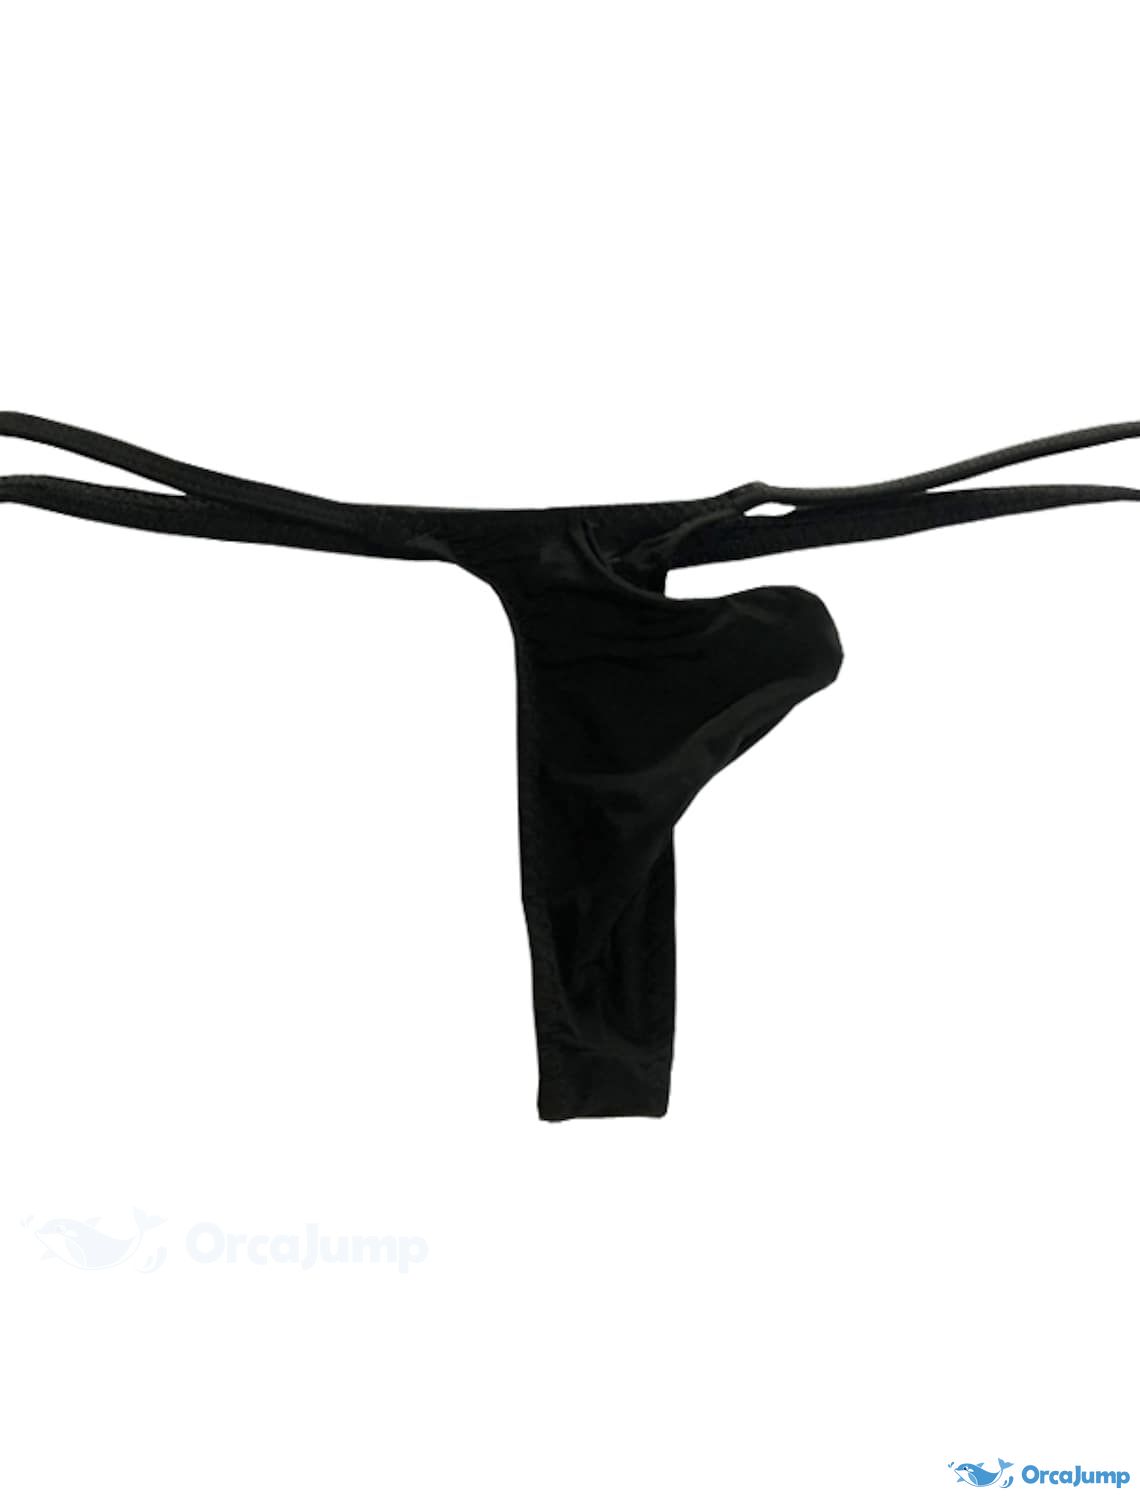 OrcaJump - Mens Solid Blushing Pink G-String & Thong Panty - Stretchy